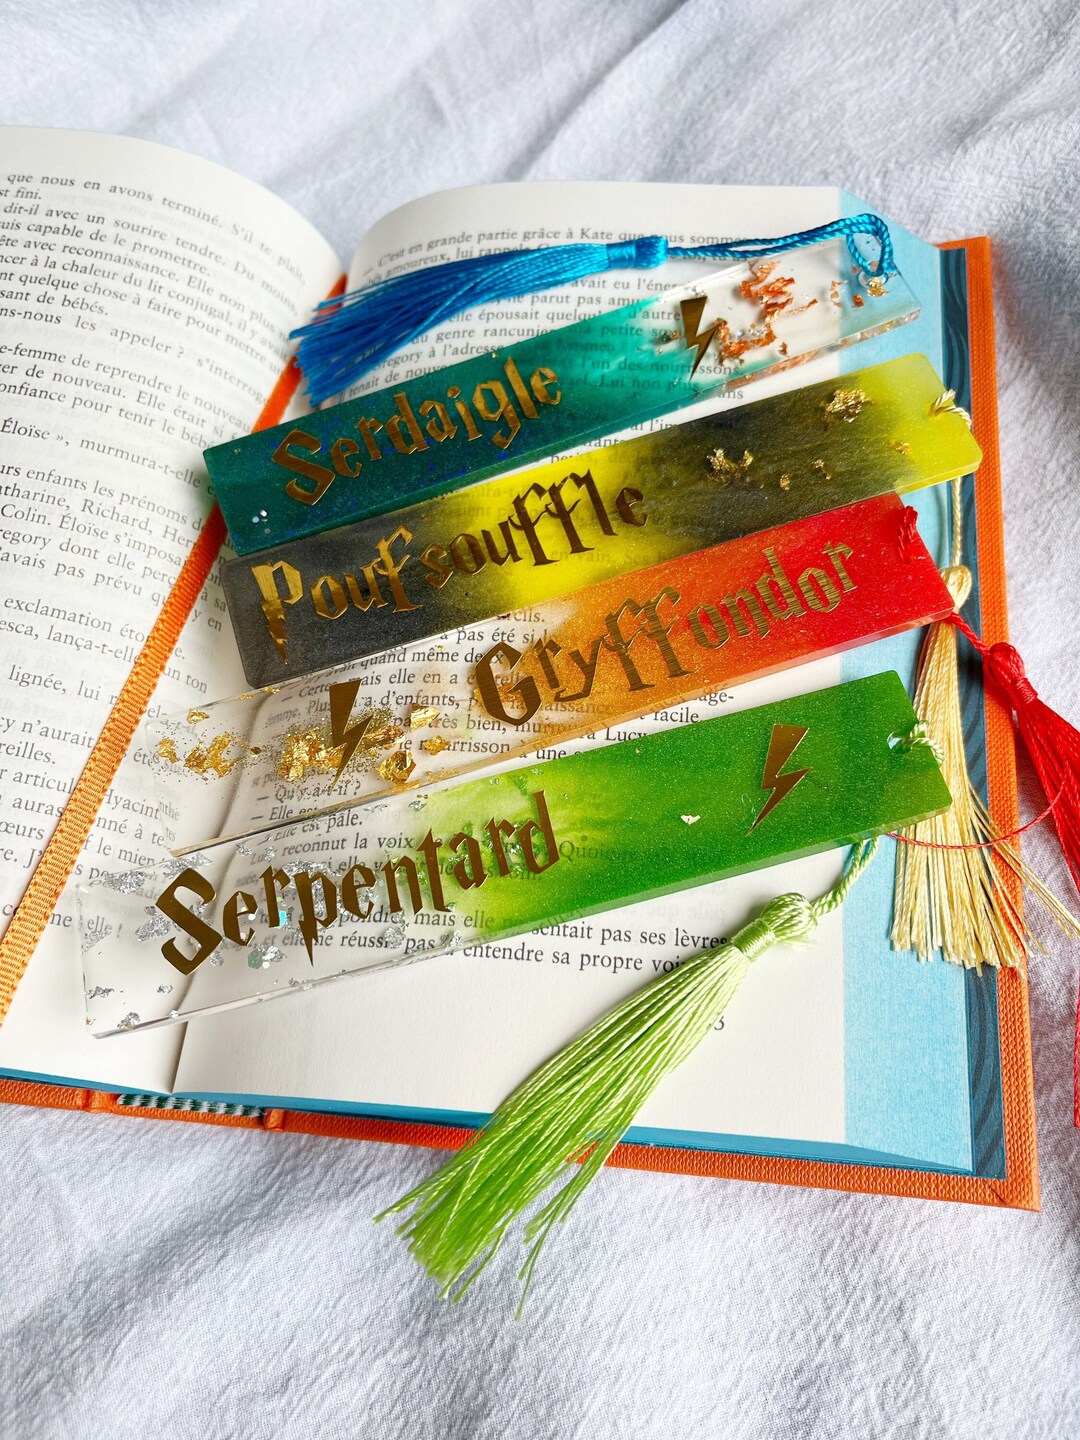 Ravenclaw Harry Potter Hogwarts Inspired Bookmark